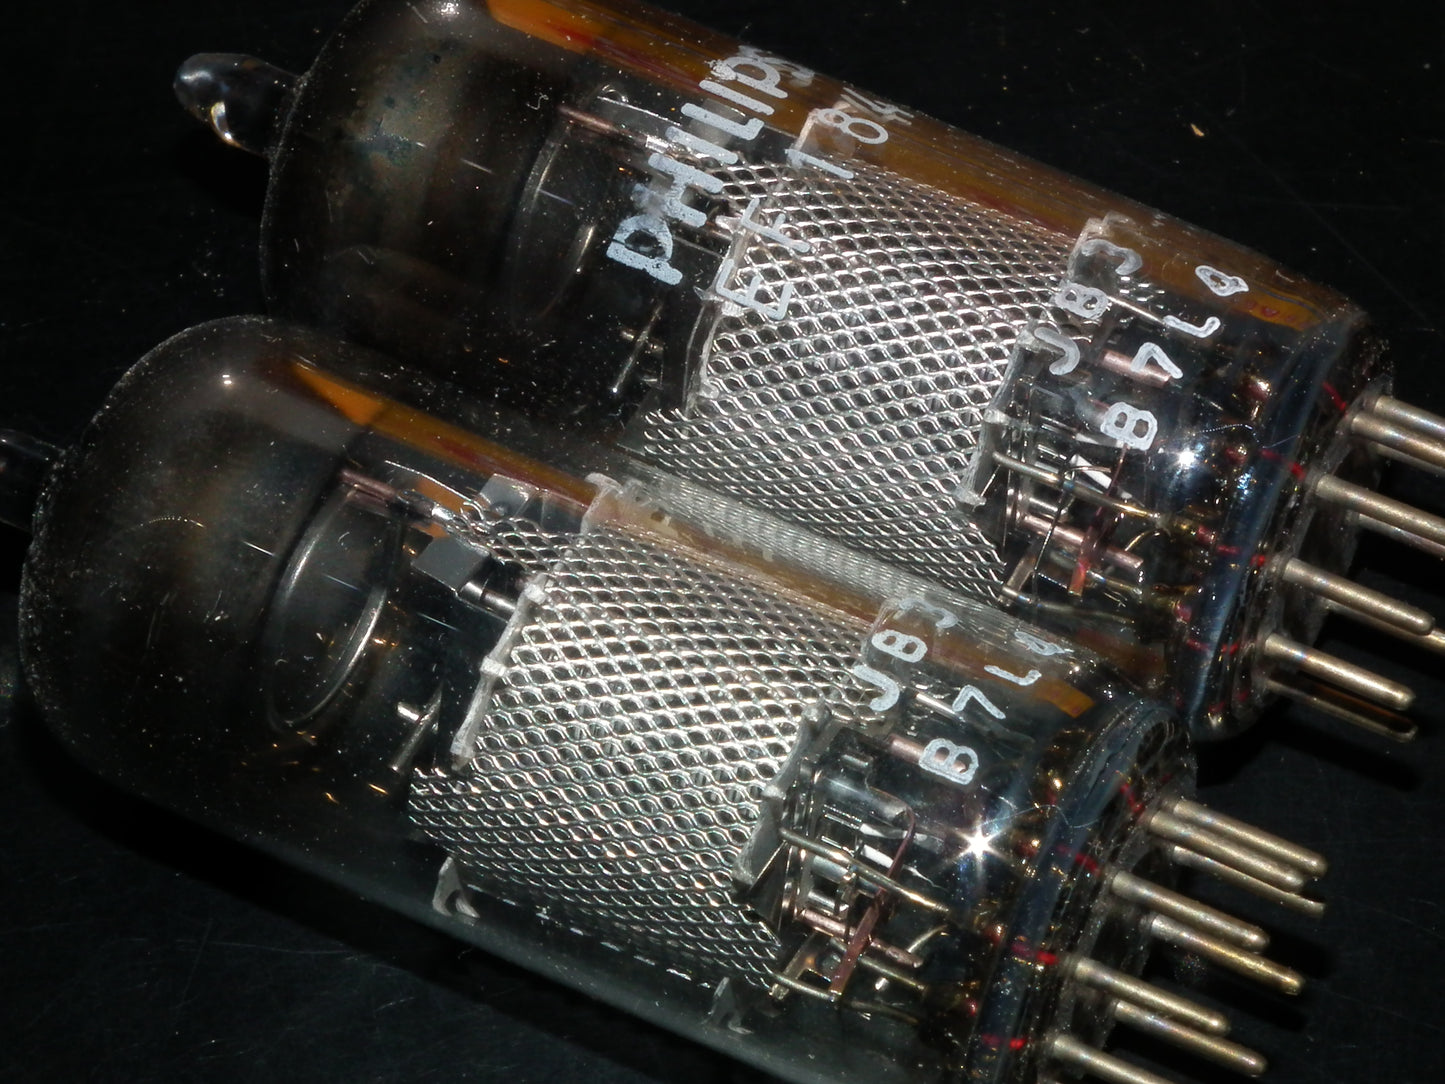 Platinum Matched Pair (2 tubes) EF184 Mullard Blackburn 6EJ7